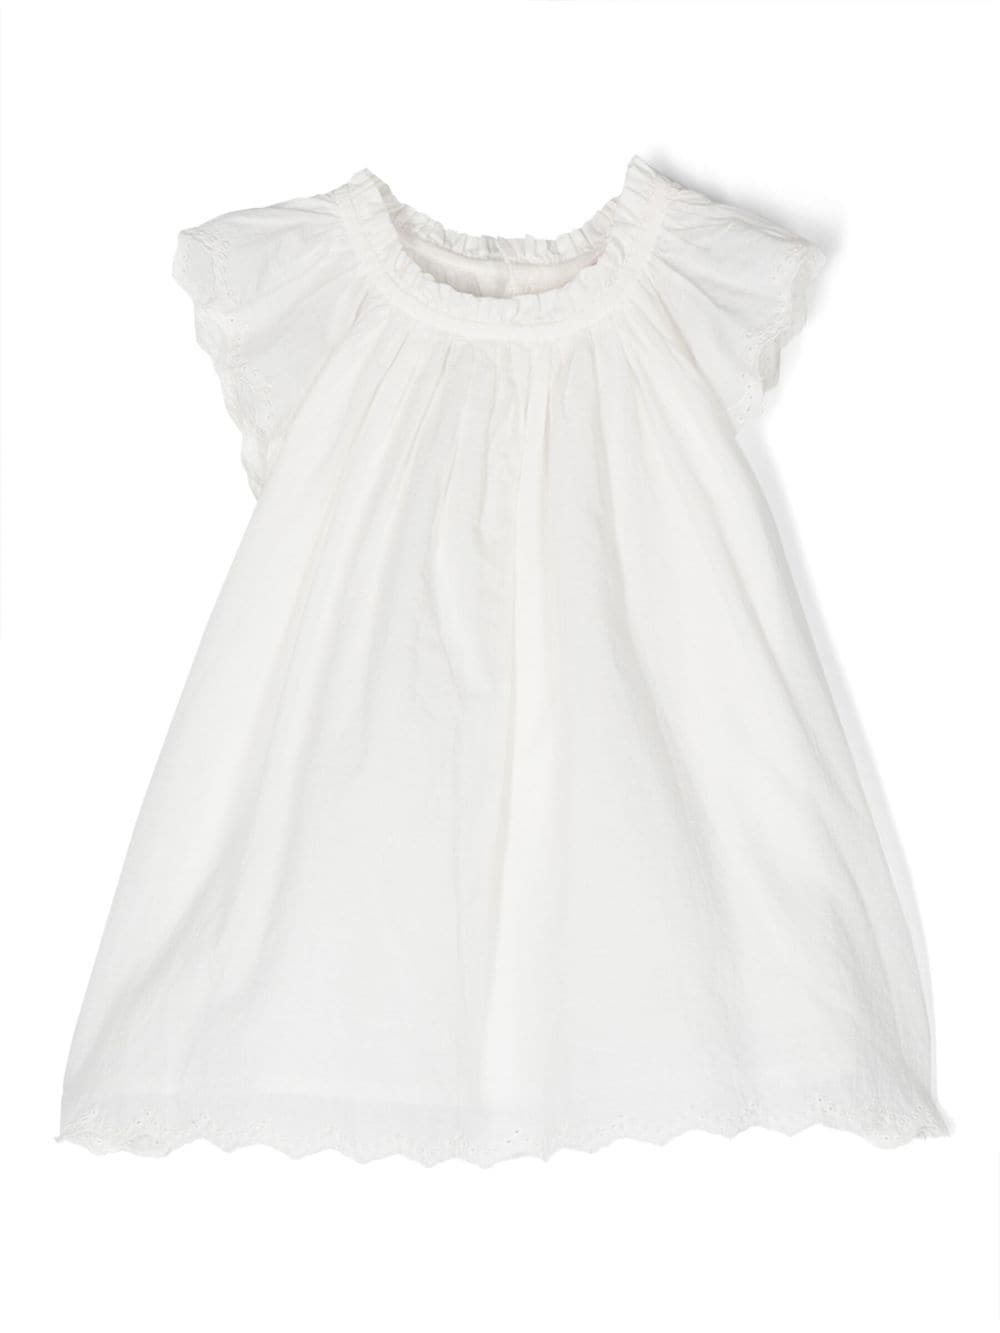 Bonpoint Babies' Nuage Cotton Dress In White